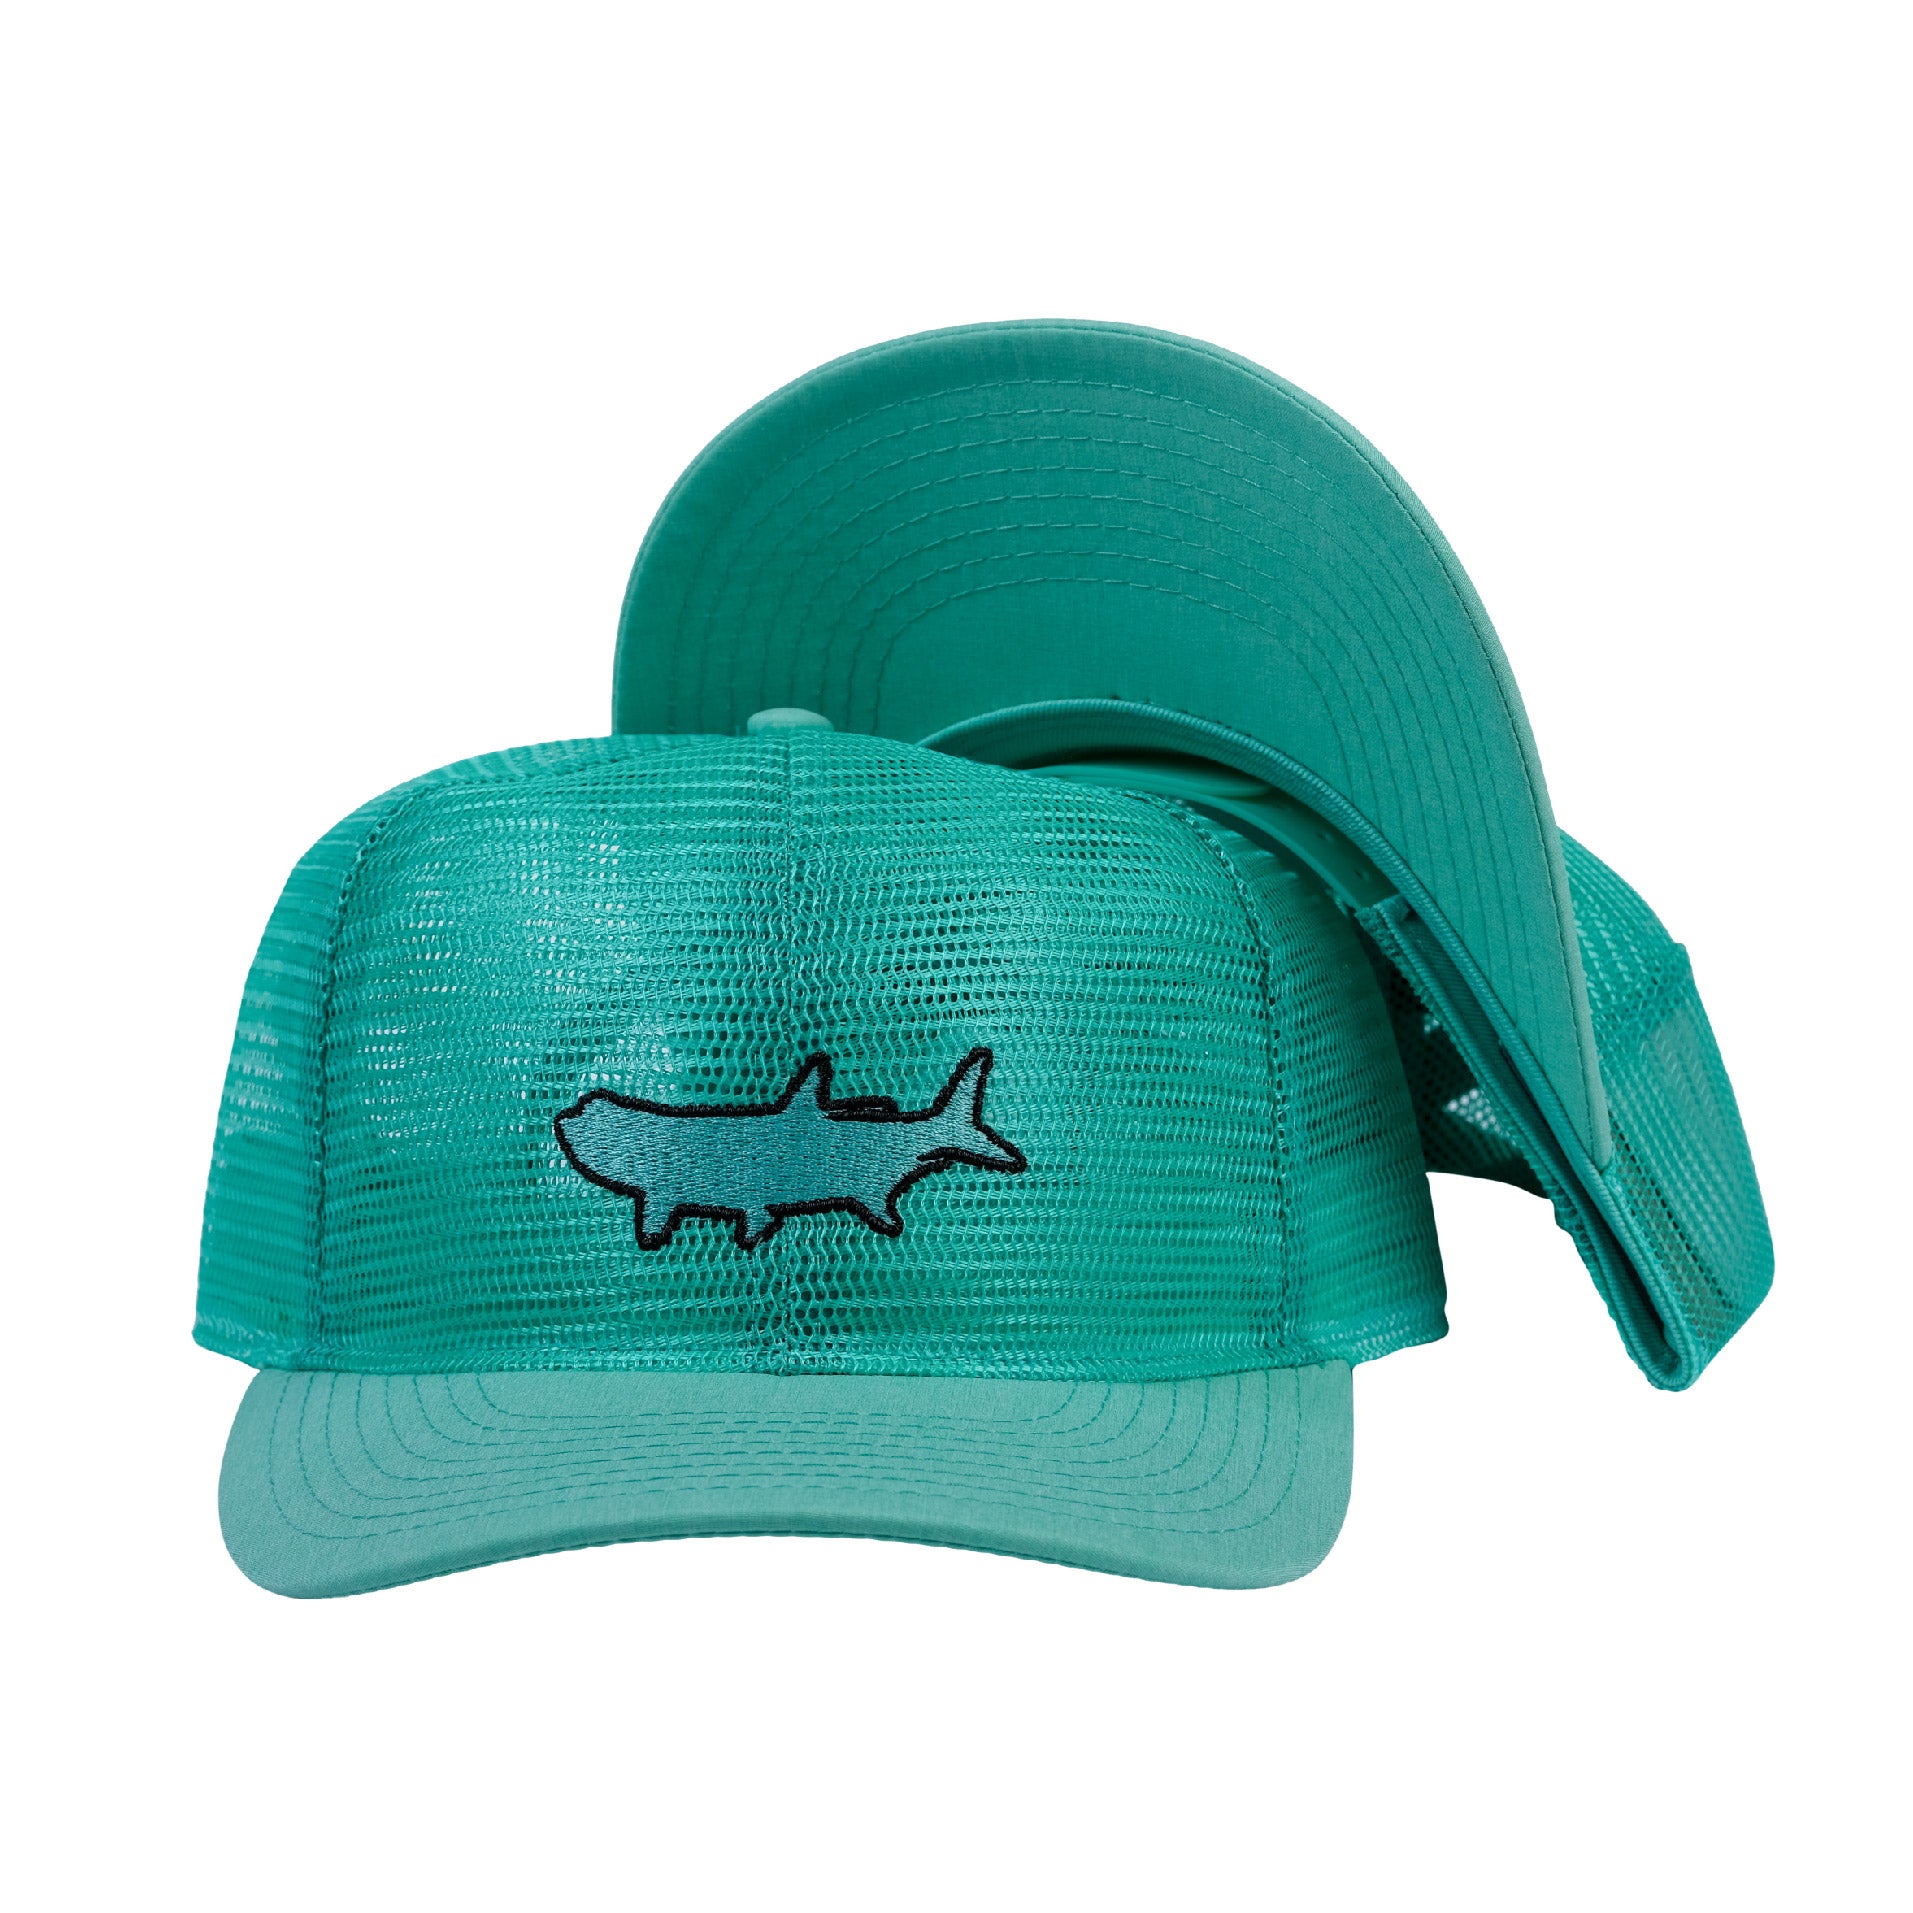 Seatec Outfitters Tarpon Cast Net Mesh Snapback Cap, Tri Tec Performance Headwear